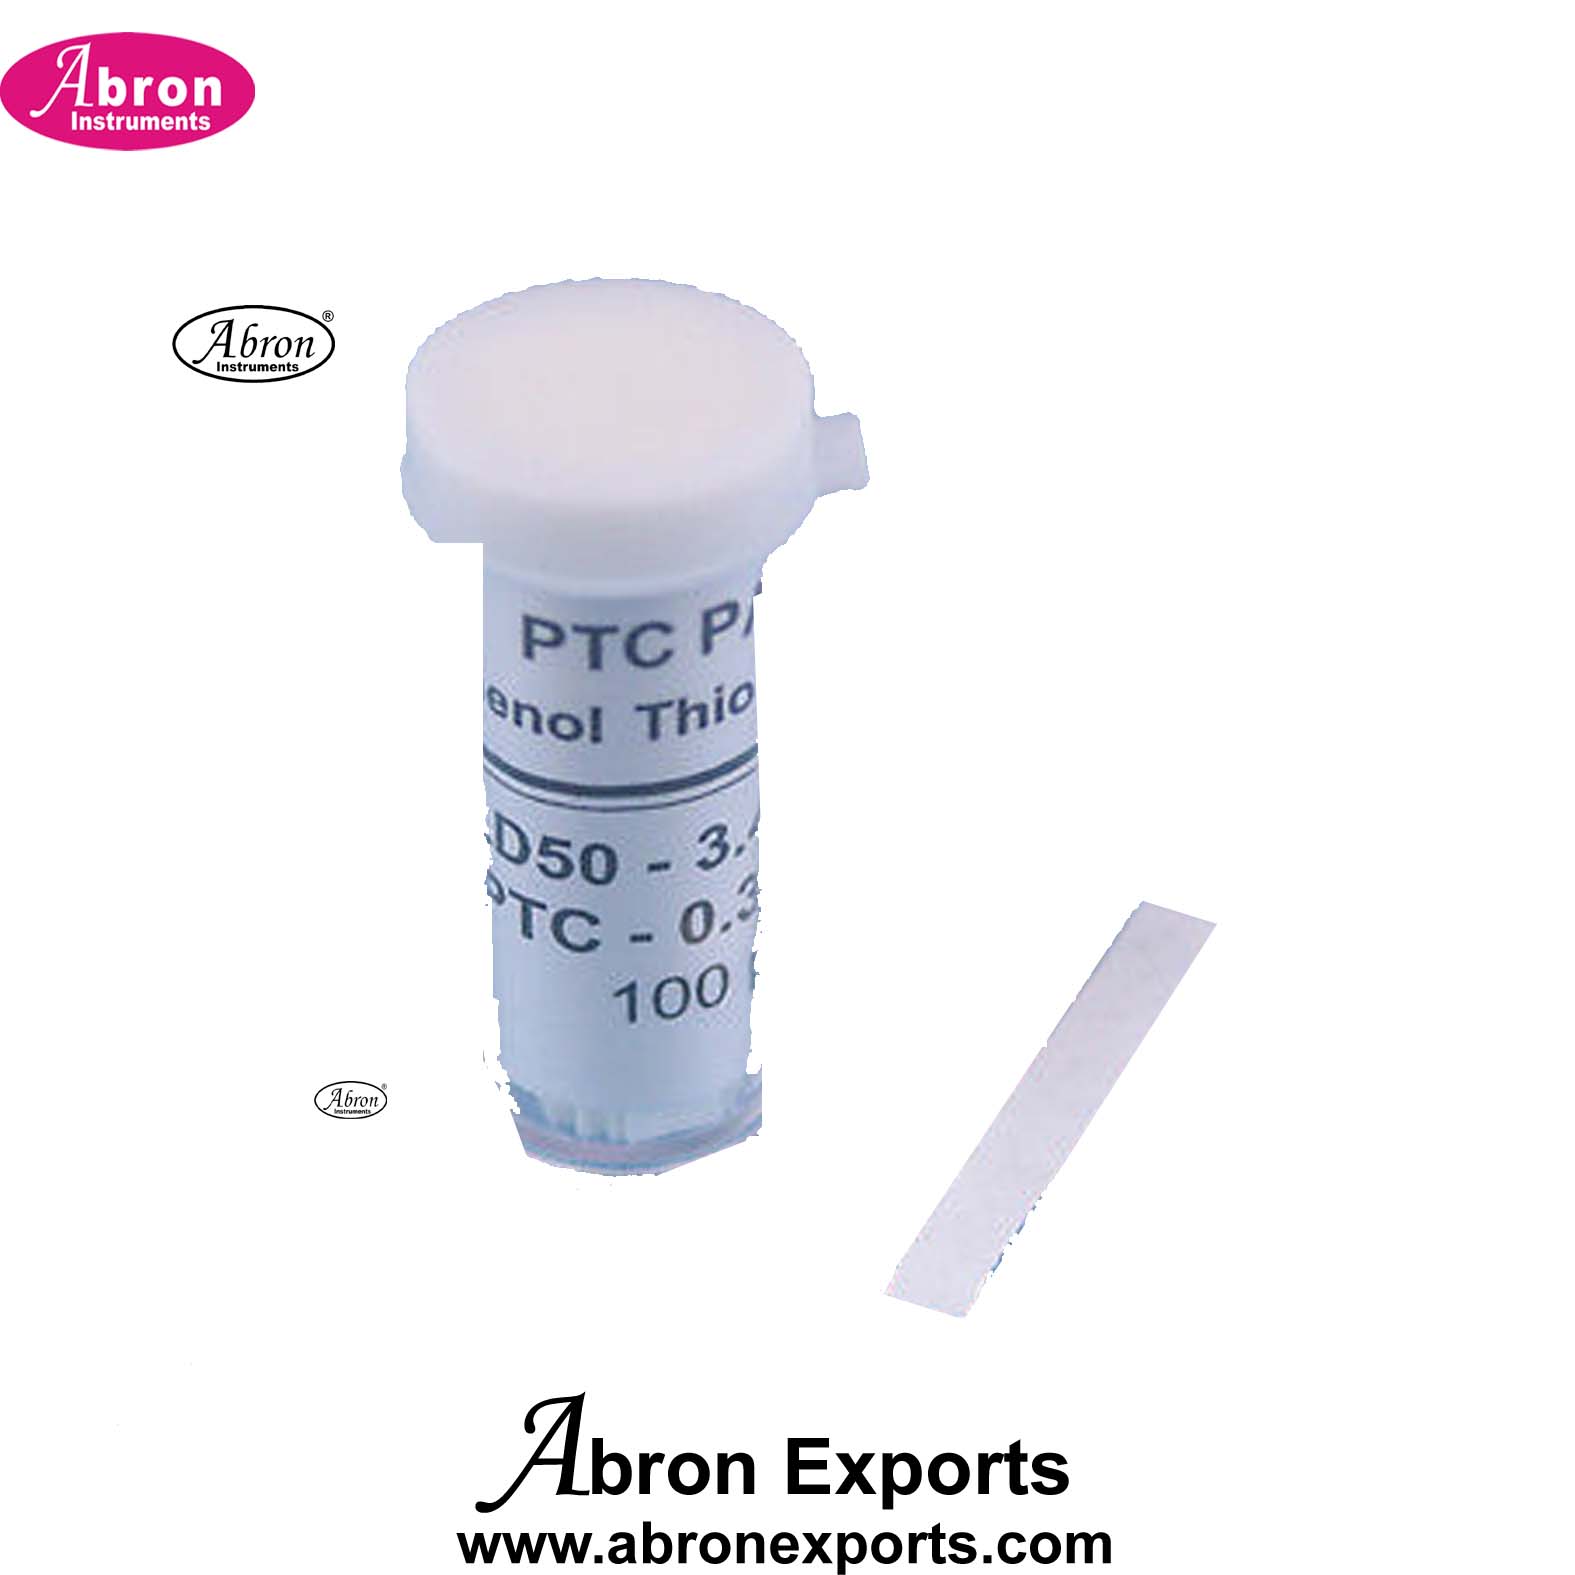 Surgical Disposable Taste Test Paper Etc Phenylthiocabamide 100 Strips Pack Abron ABM-1524P 